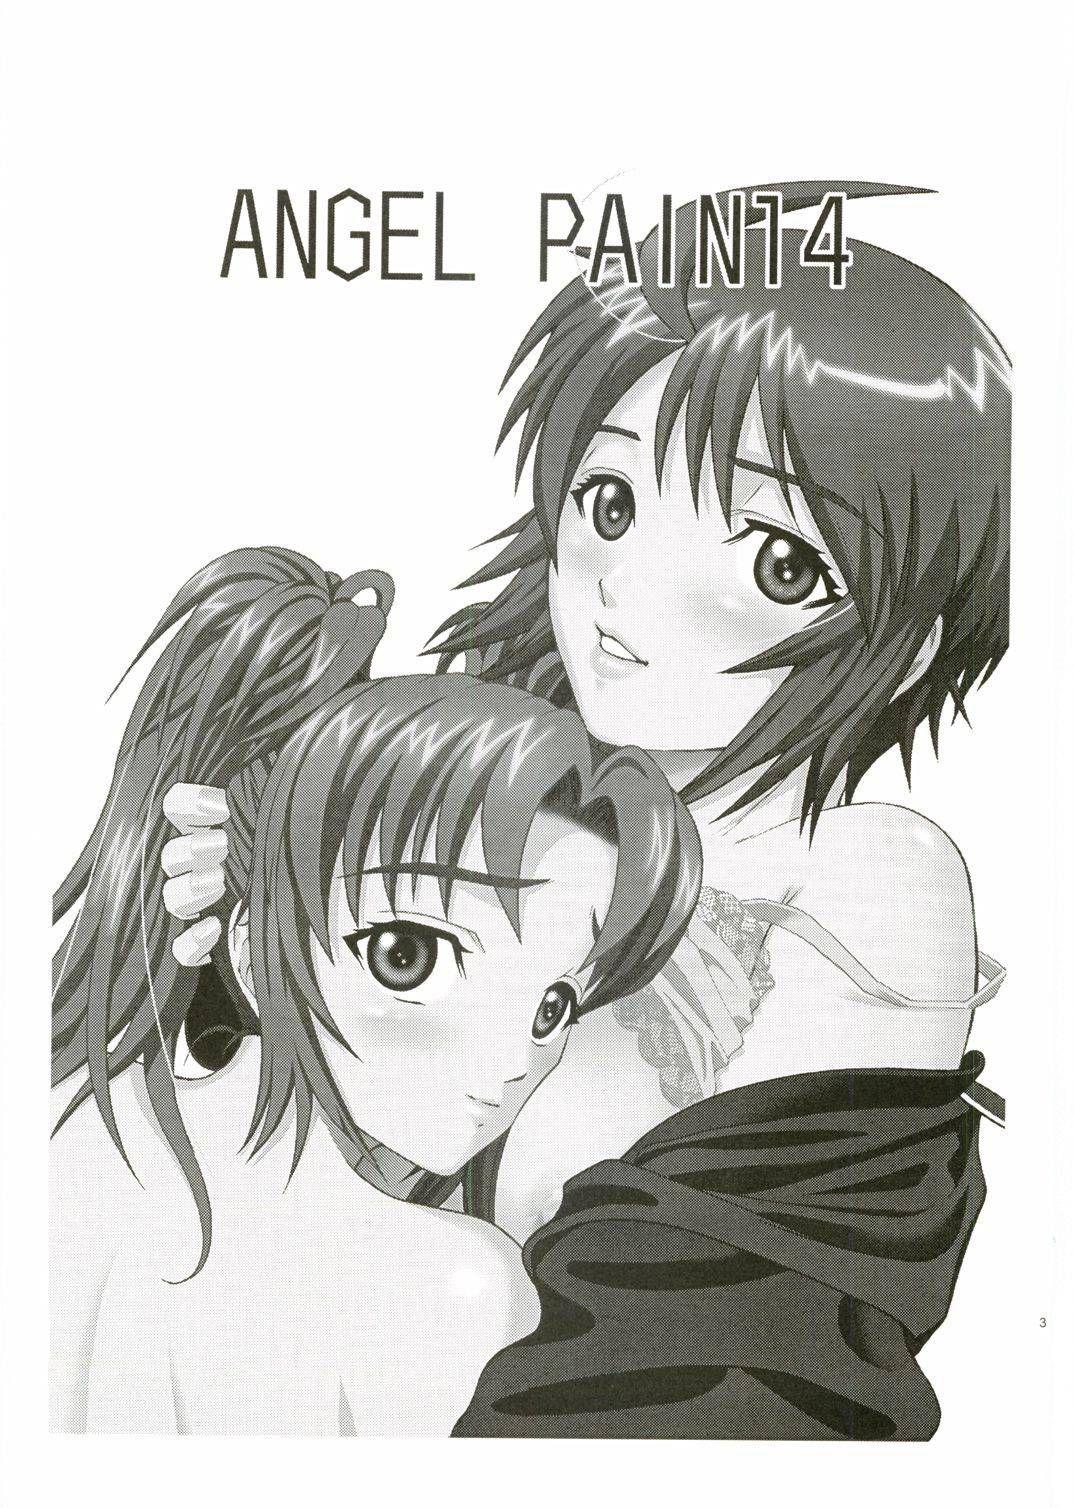 ANGEL PAIN 14 1